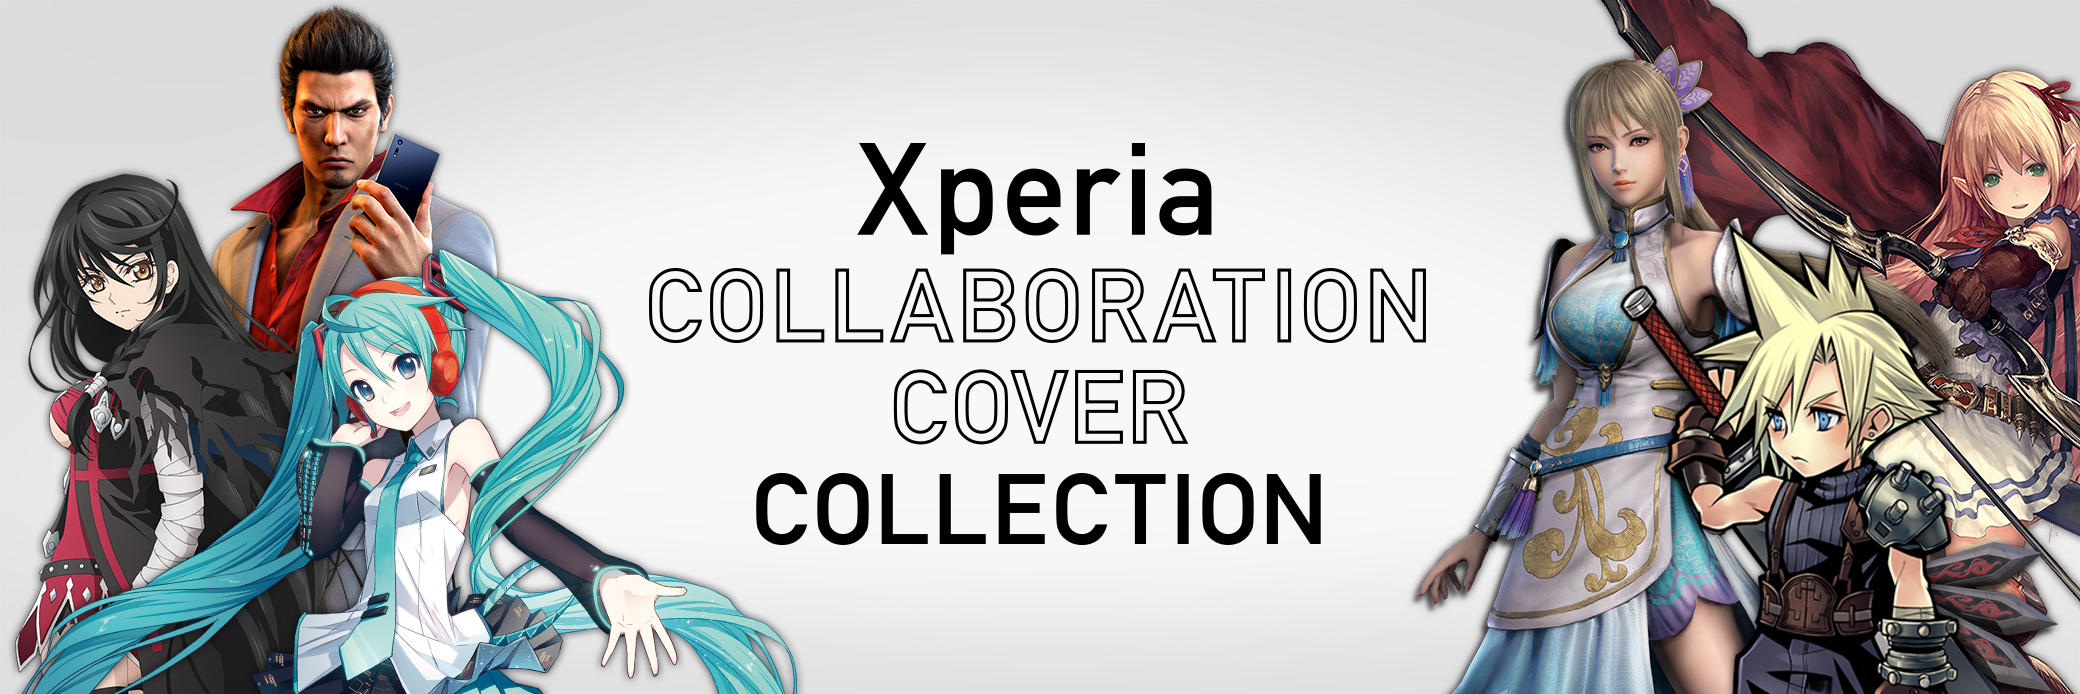 Xperia COLLABORATION COVER COLLECTION